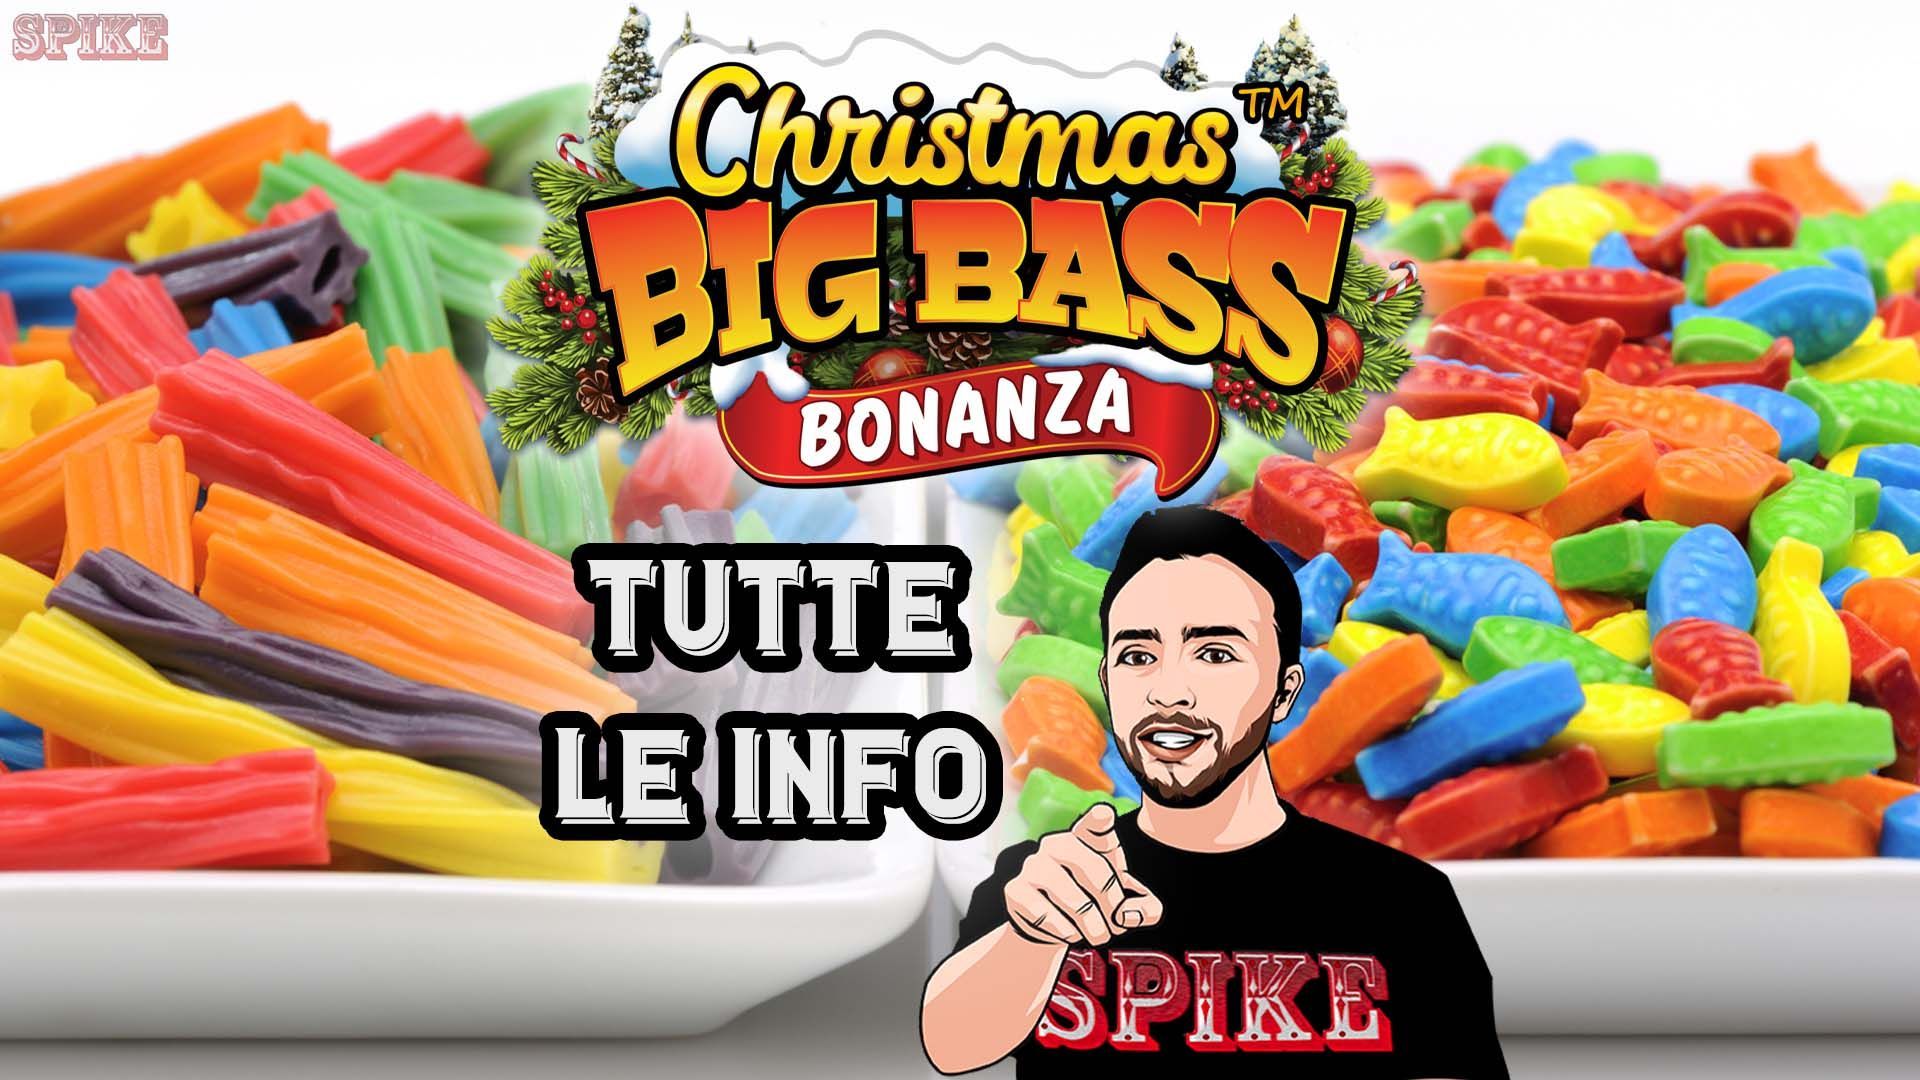 Christmas Big Bass Bonanza Slot Machine